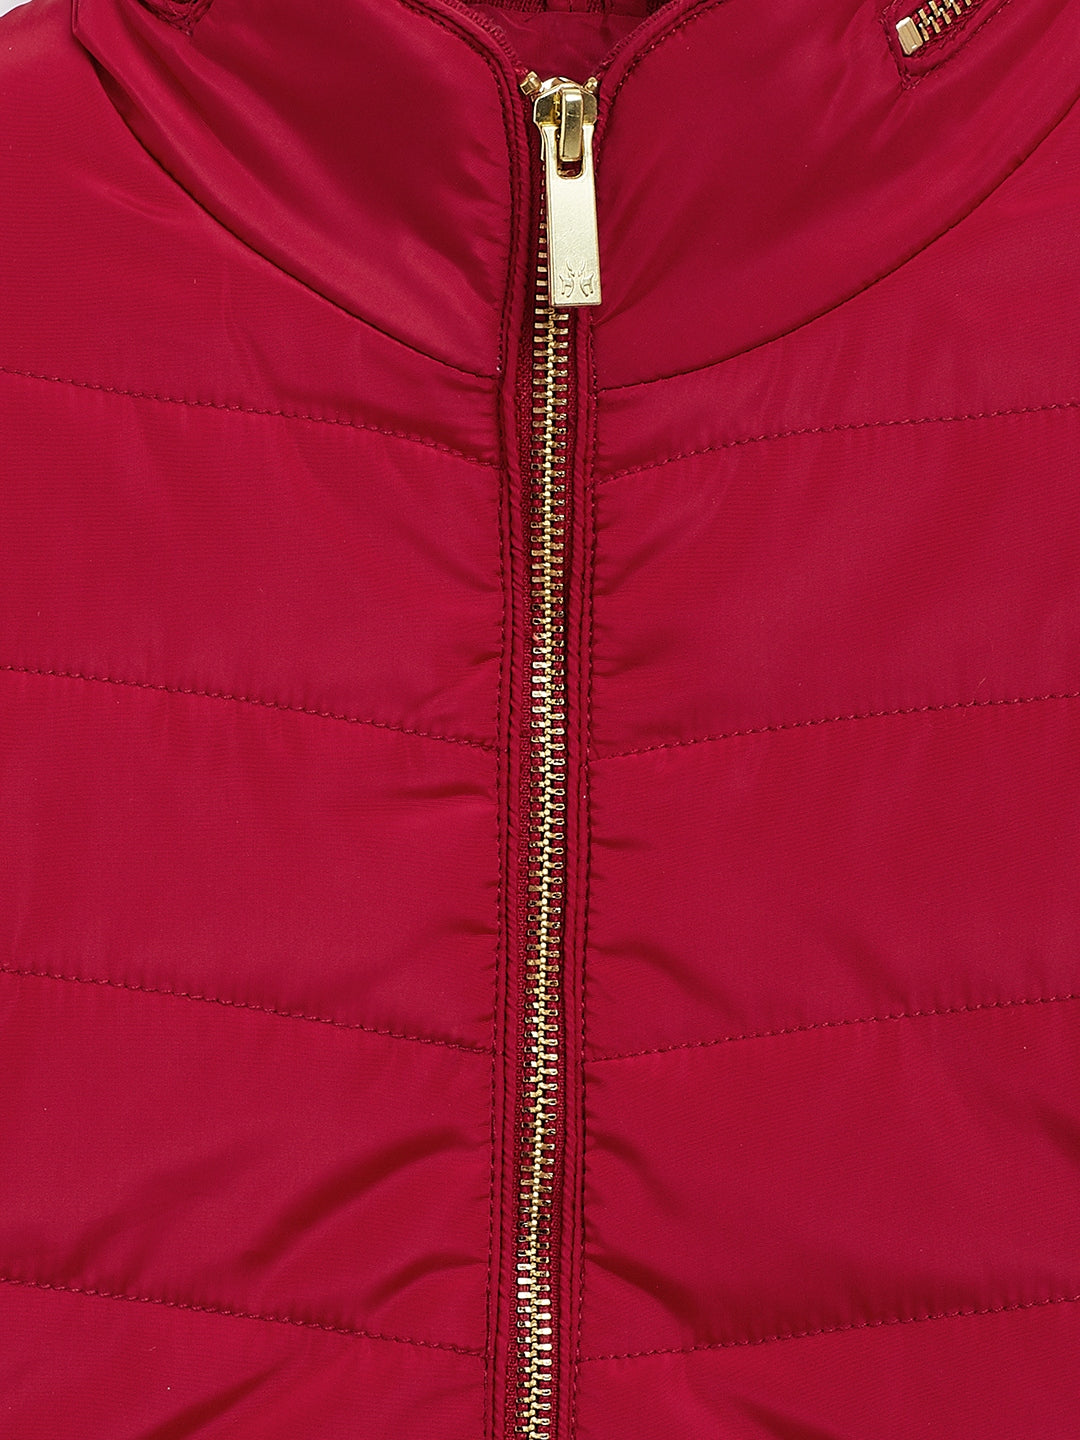 Red Puffer Jacket - Girls Jackets